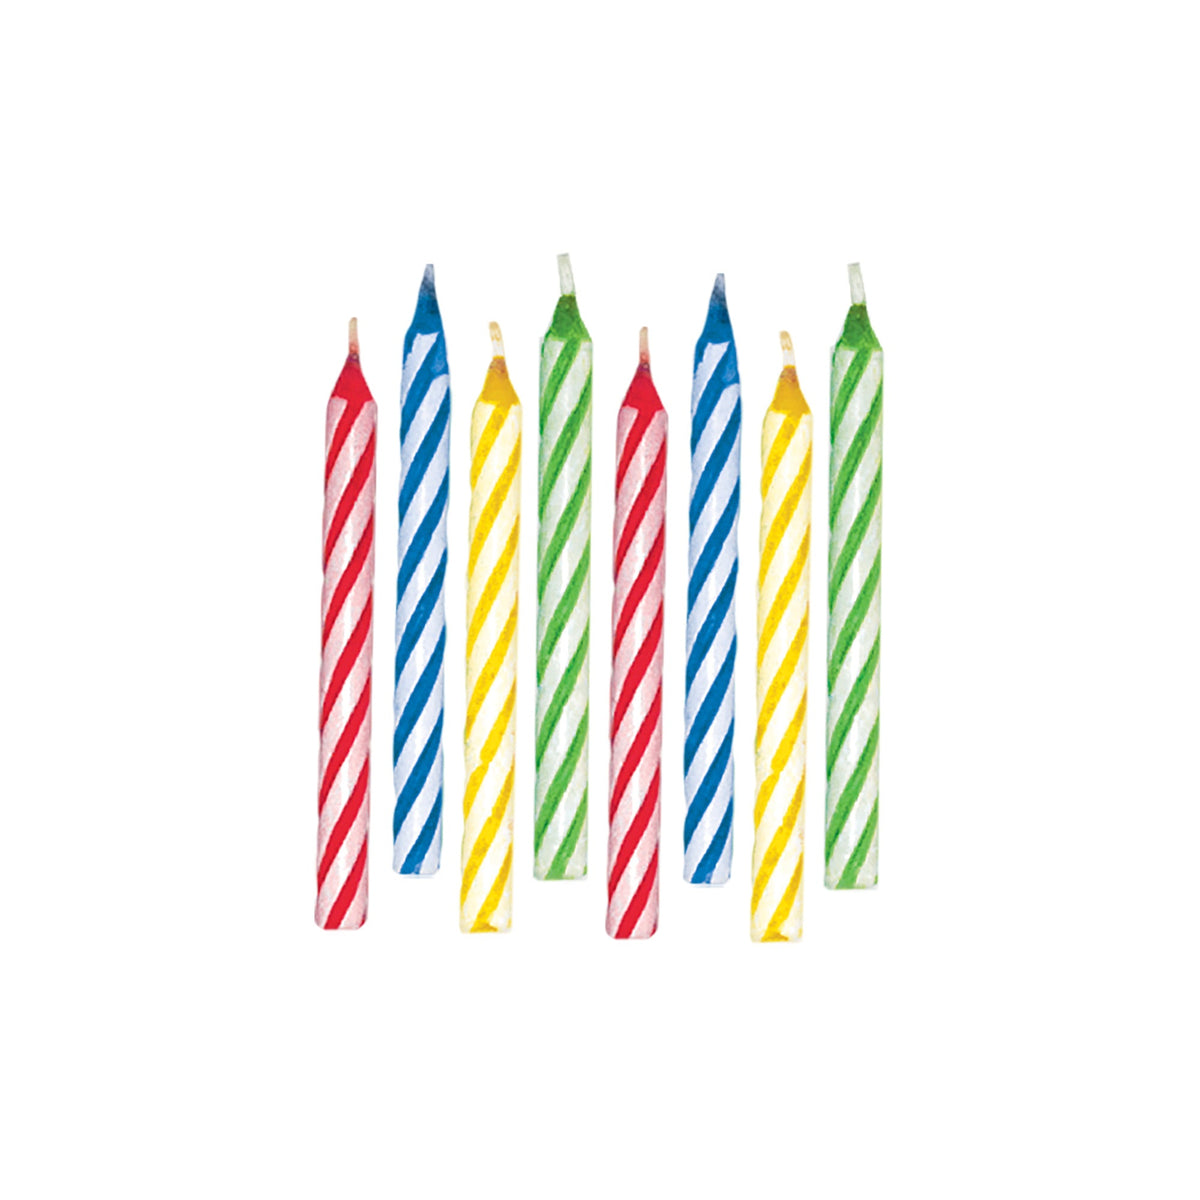 Magic Re-Light Birthday Candles